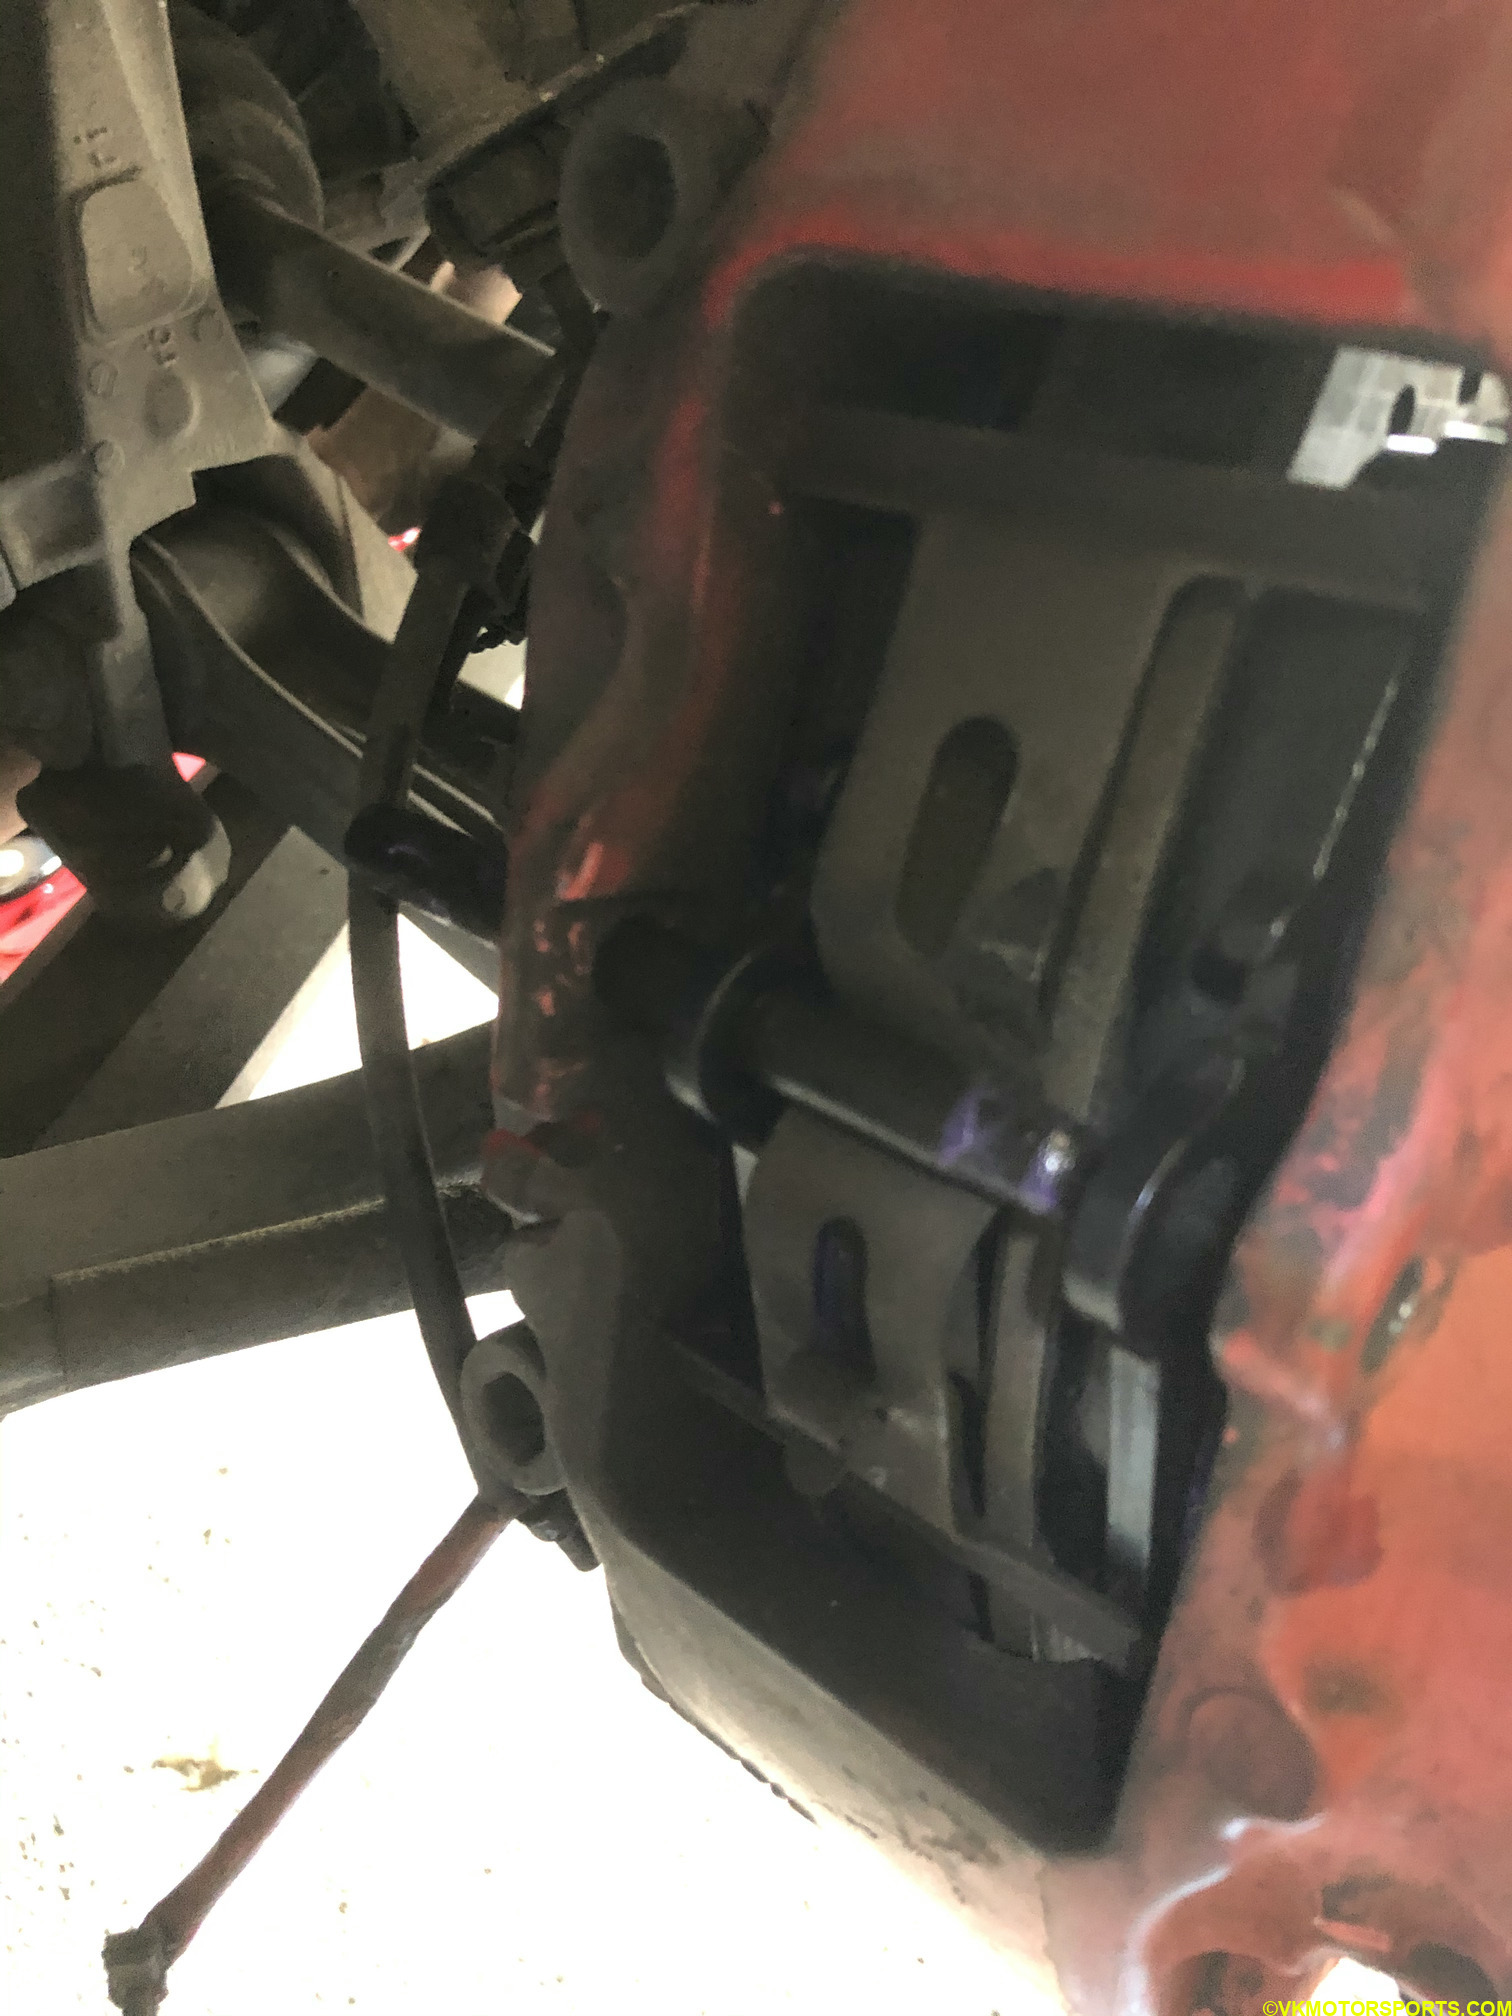 Figure 13. Install new brake pads